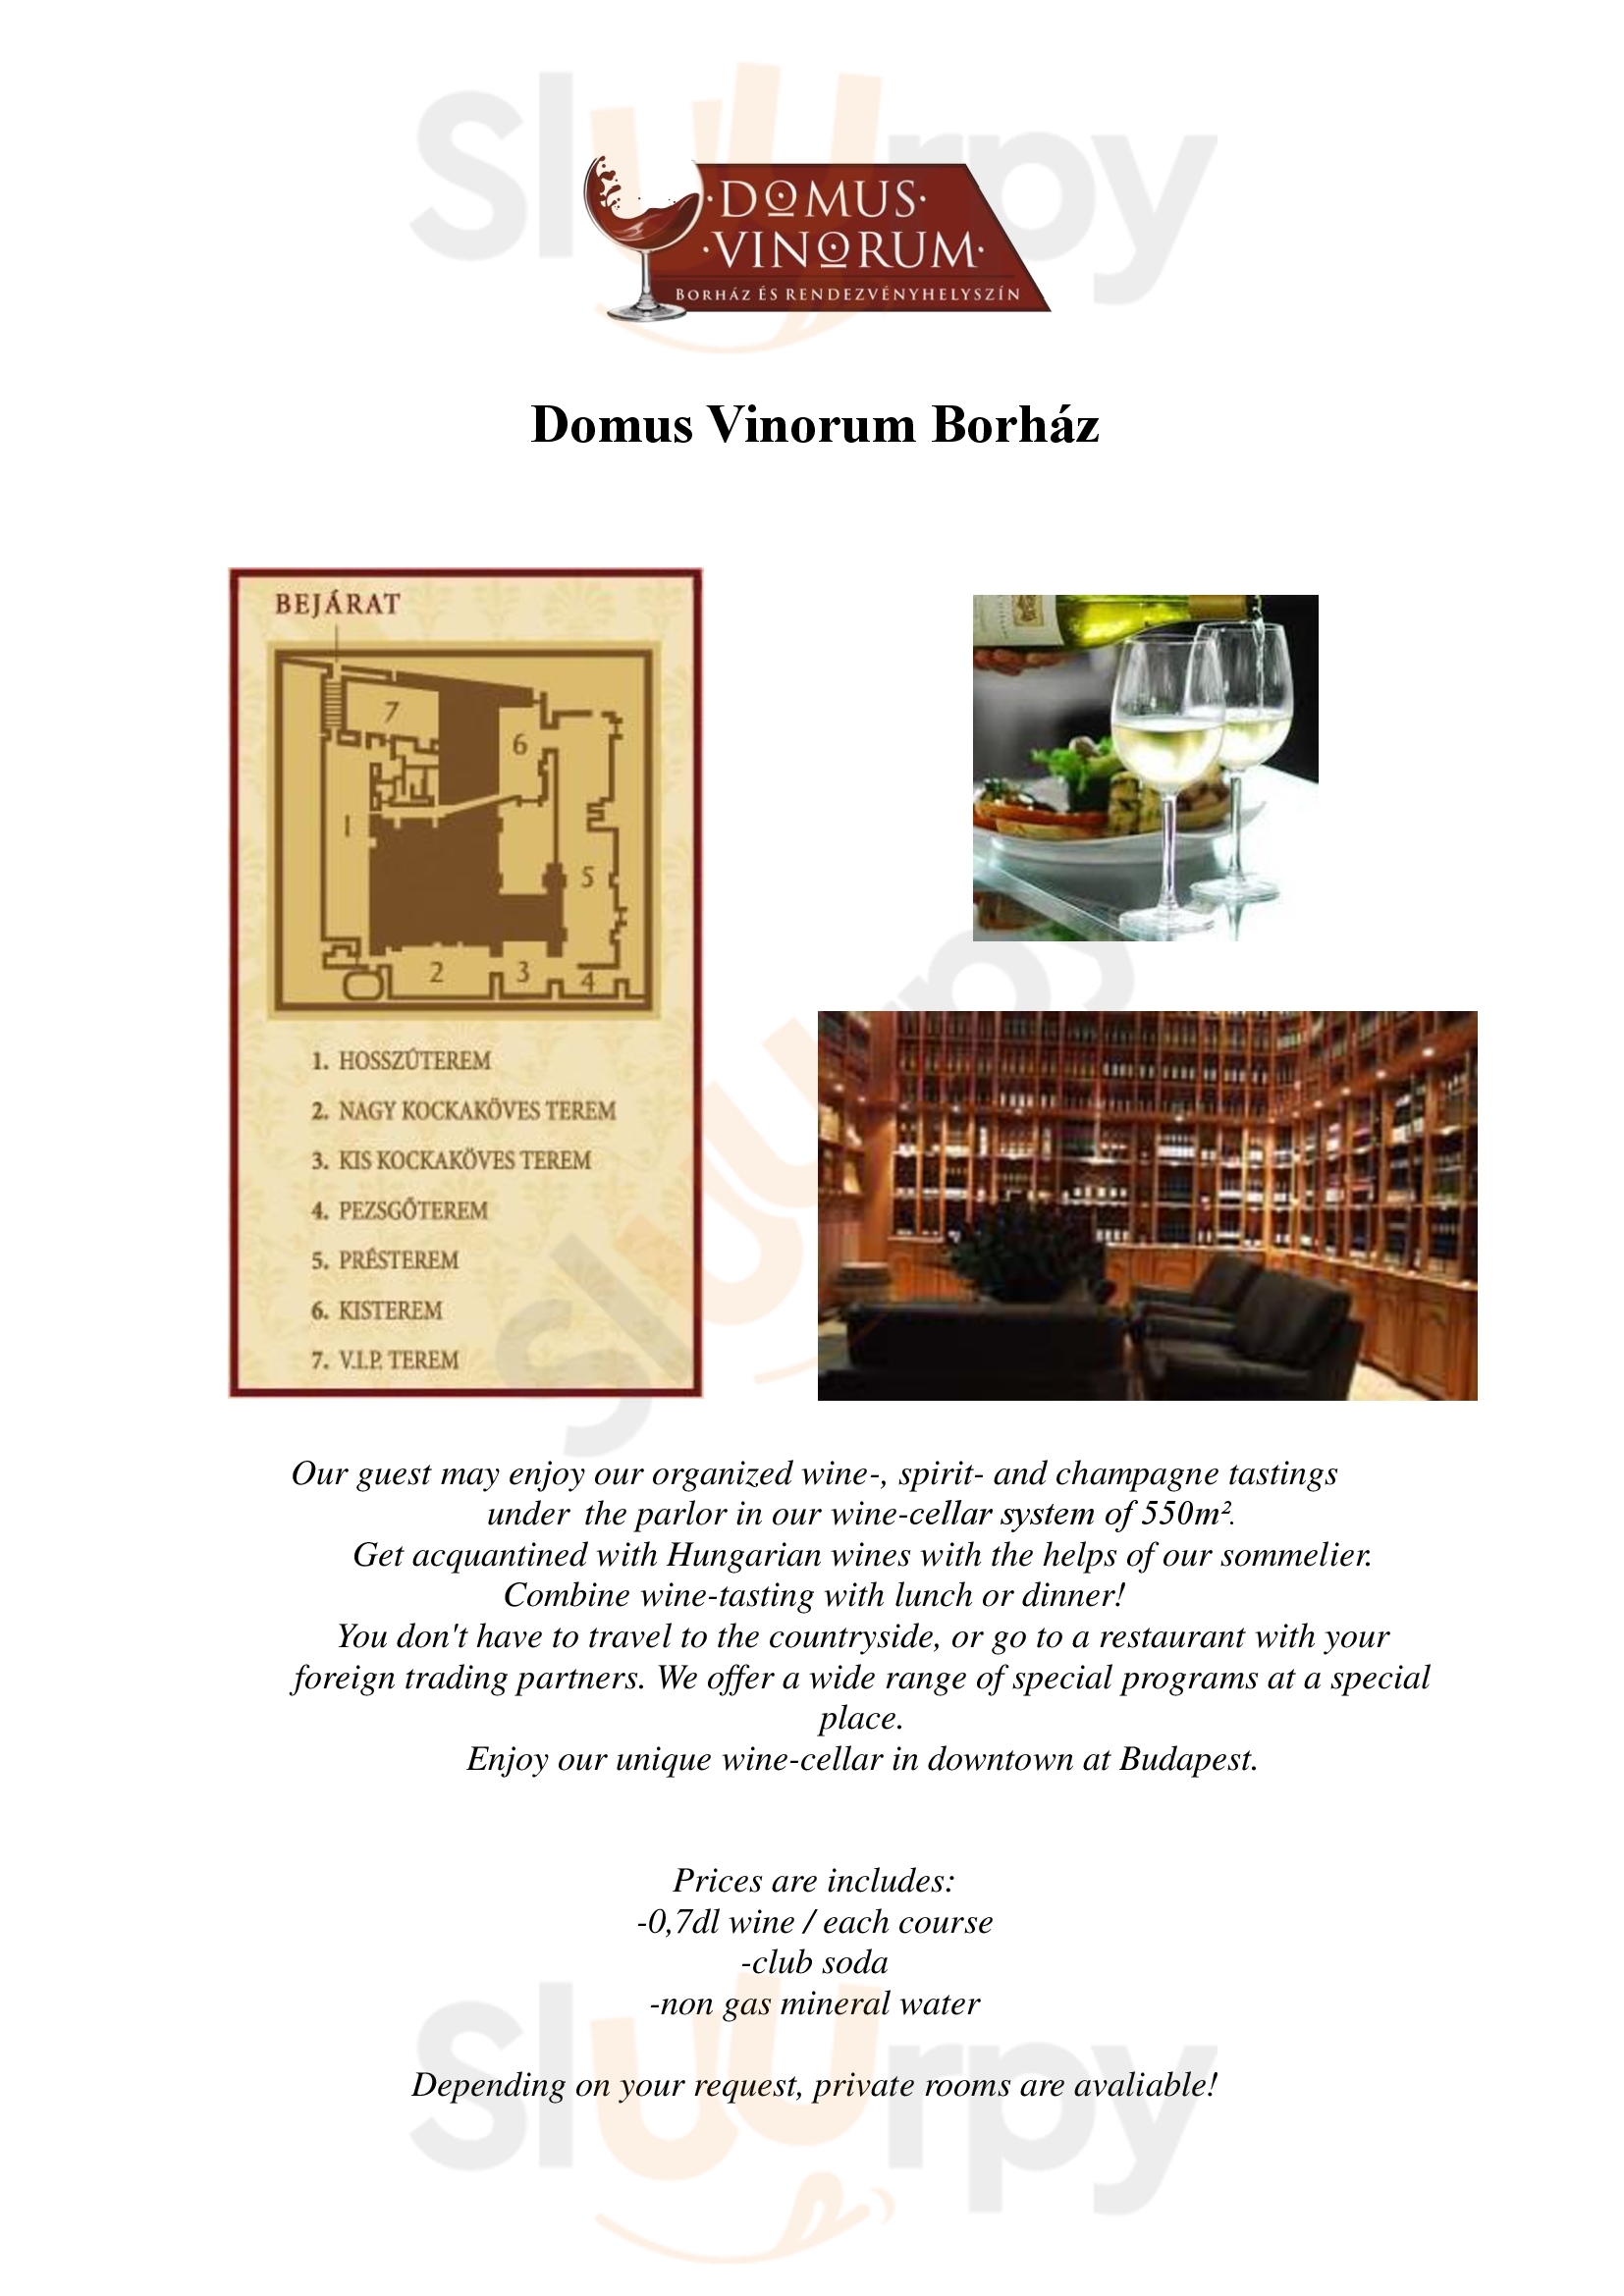 Domus Vinorum Wine House And Event Hall Budapest Menu - 1